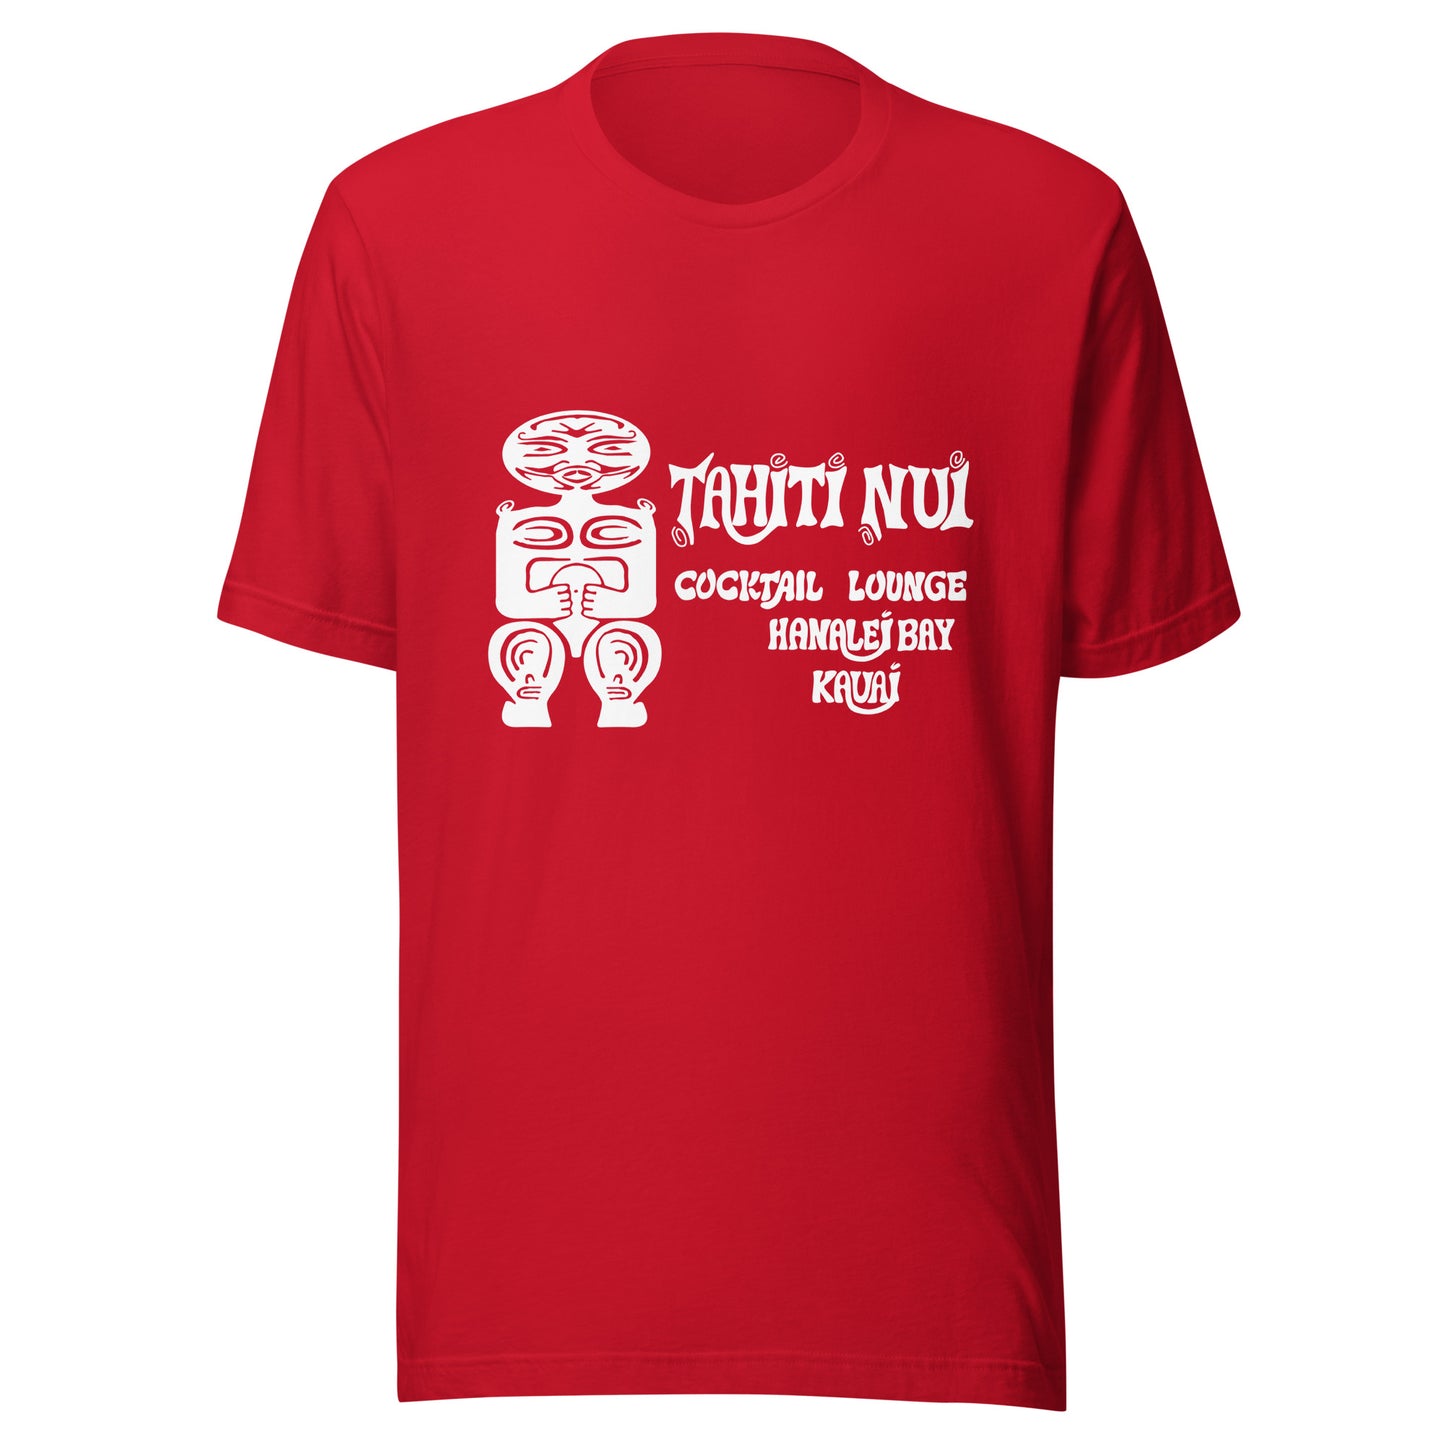 Unisex t-shirt - white Tahiti Nui logo